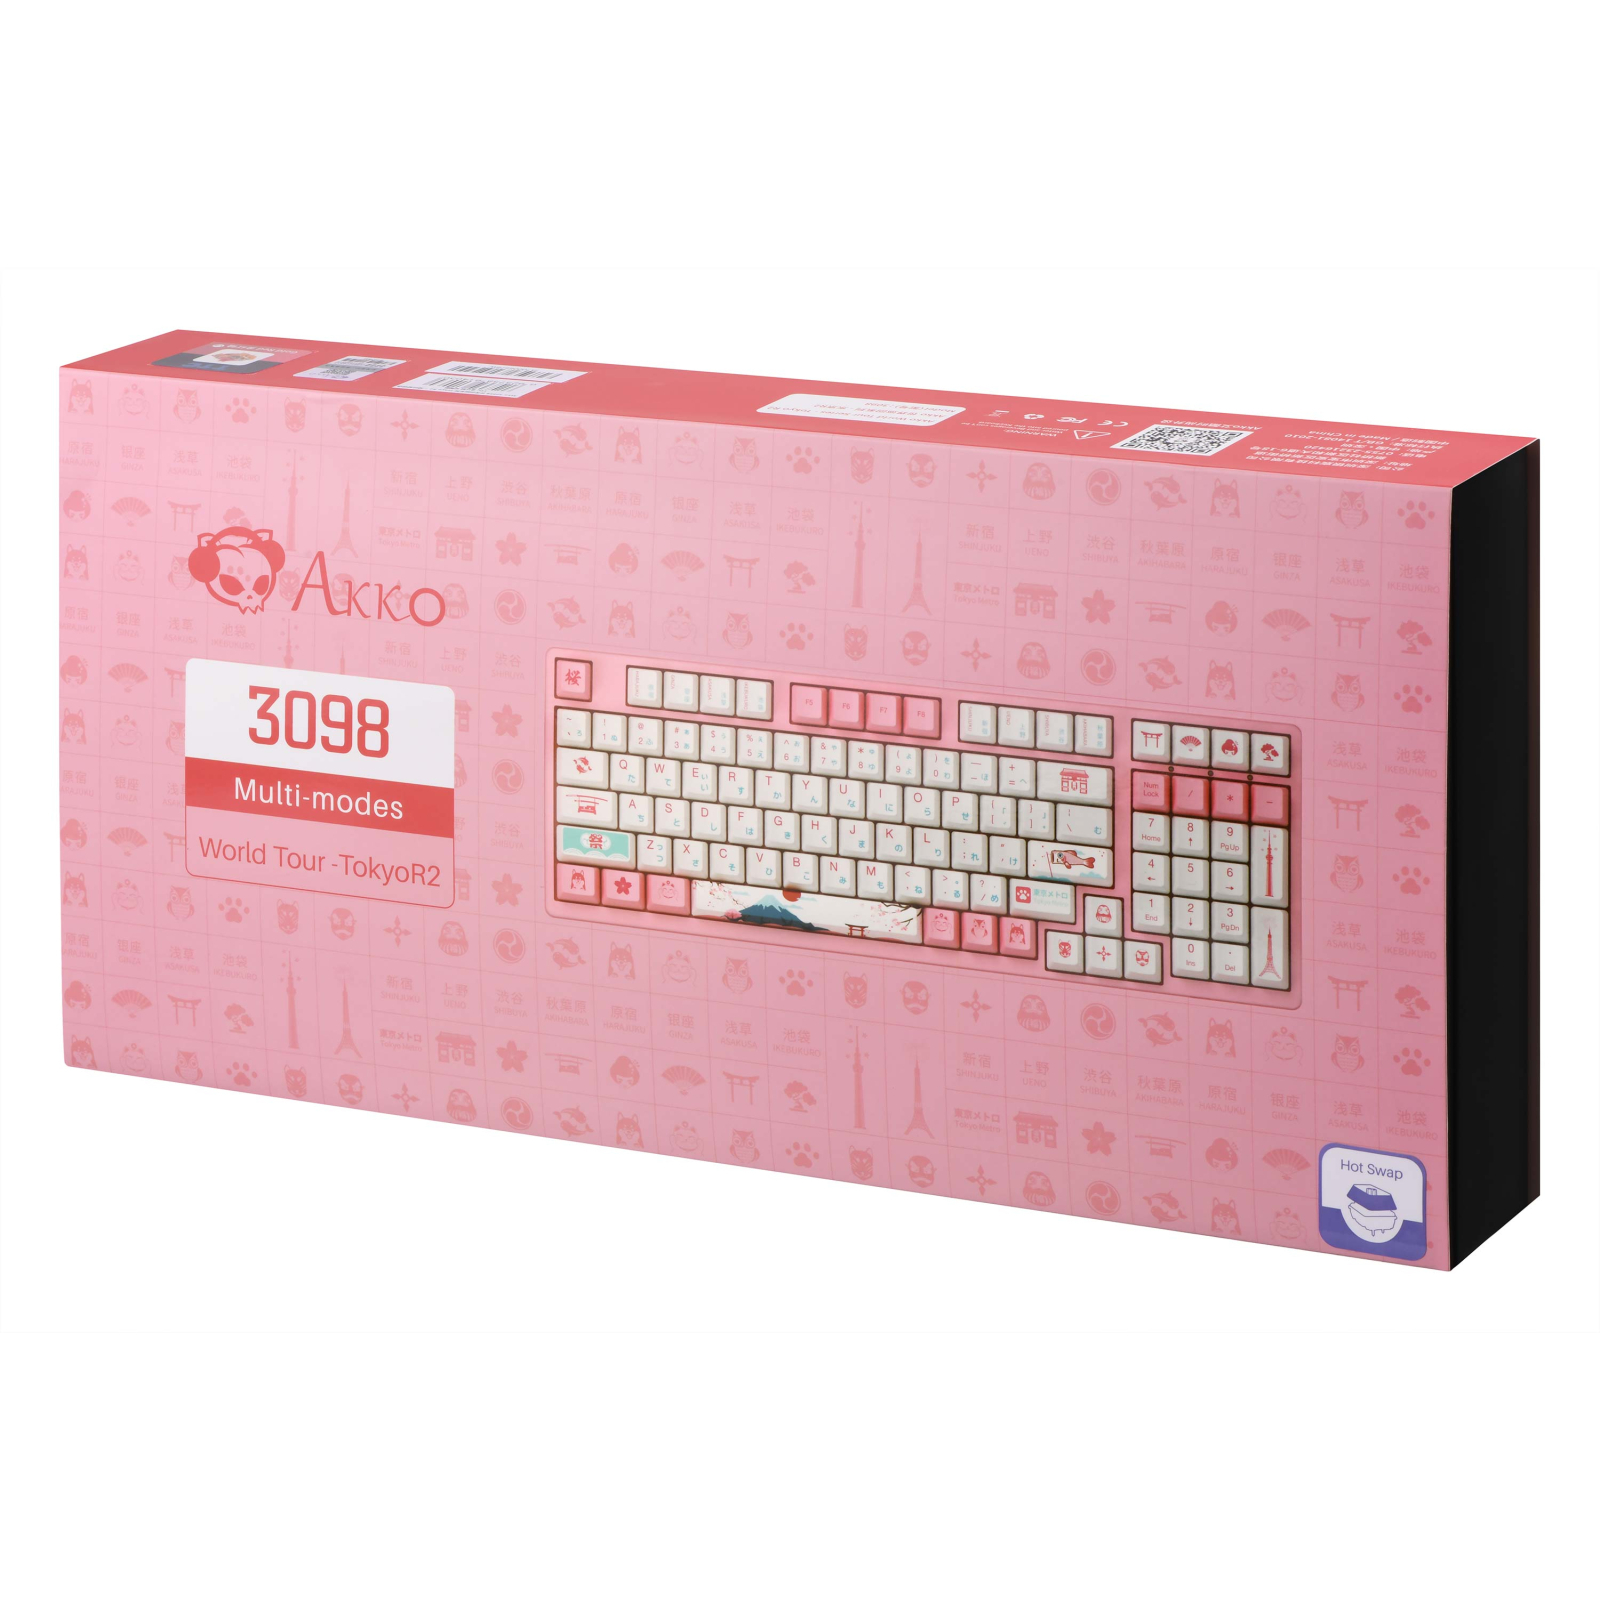 Клавиатура Akko 3098B World Tour-Tokyo R2 98Key TTC Golden Red Hot-swappable UA RGB Pink (6925758614030) изображение 13